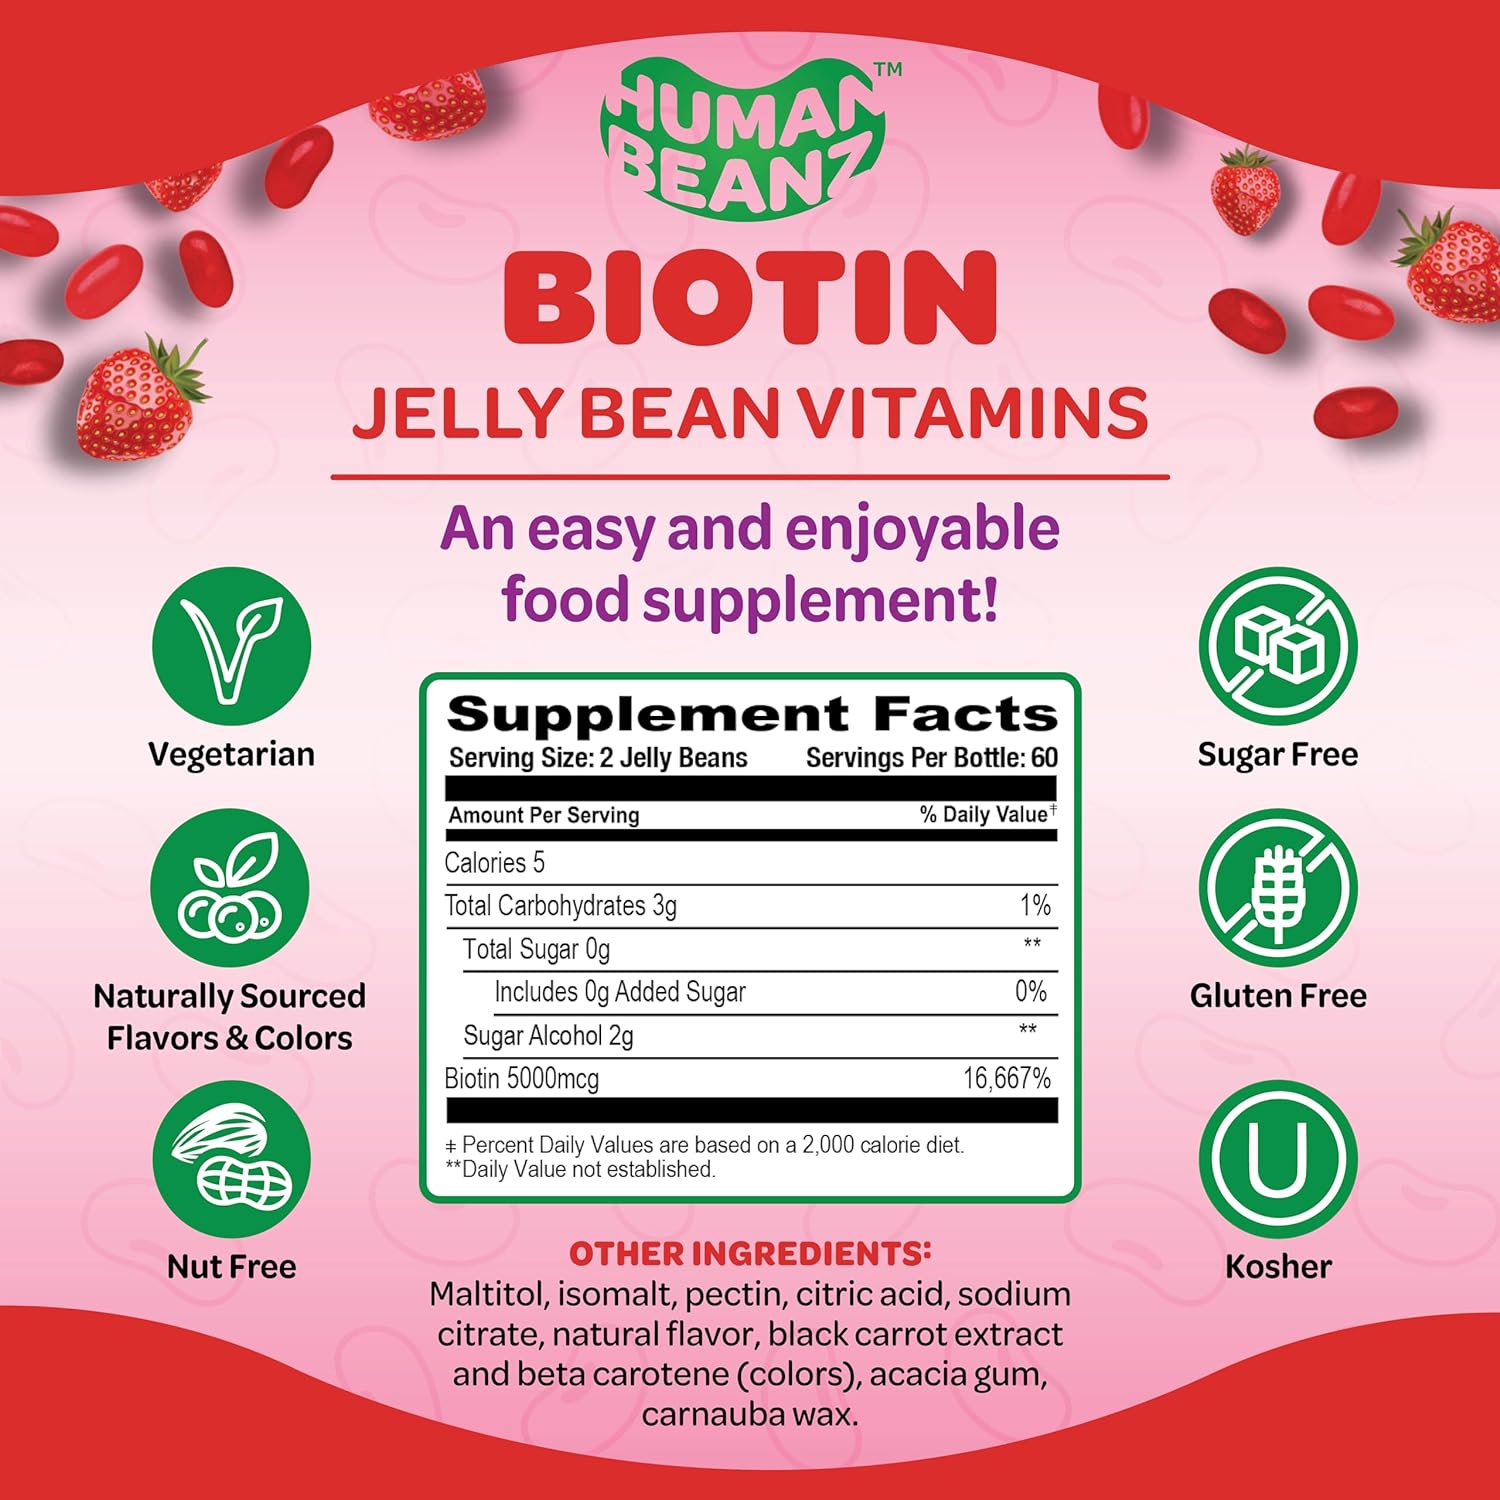 Sugar Free Biotin Jelly Bean Gummy Vitamins, 5000mcg Extra Strength Biotin for Hair, Skin, and Nails, 120 Strawberry Blast Jellybeans Vitamins for Men and Women, Kosher